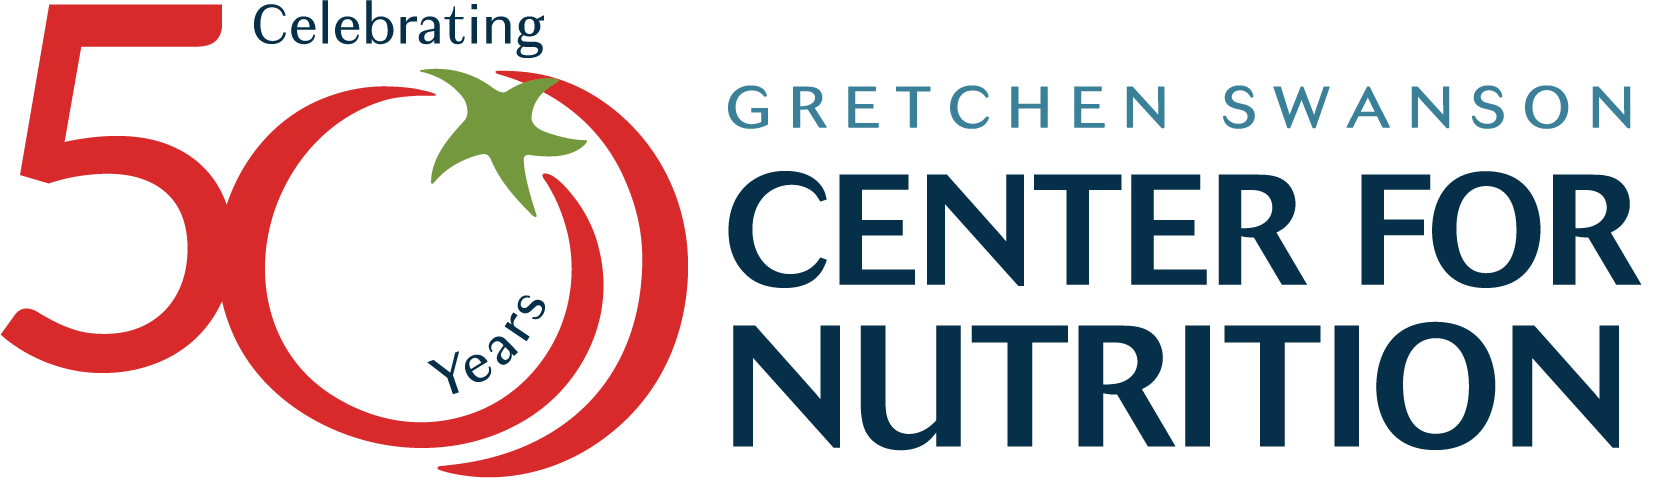 Center for Nutrition